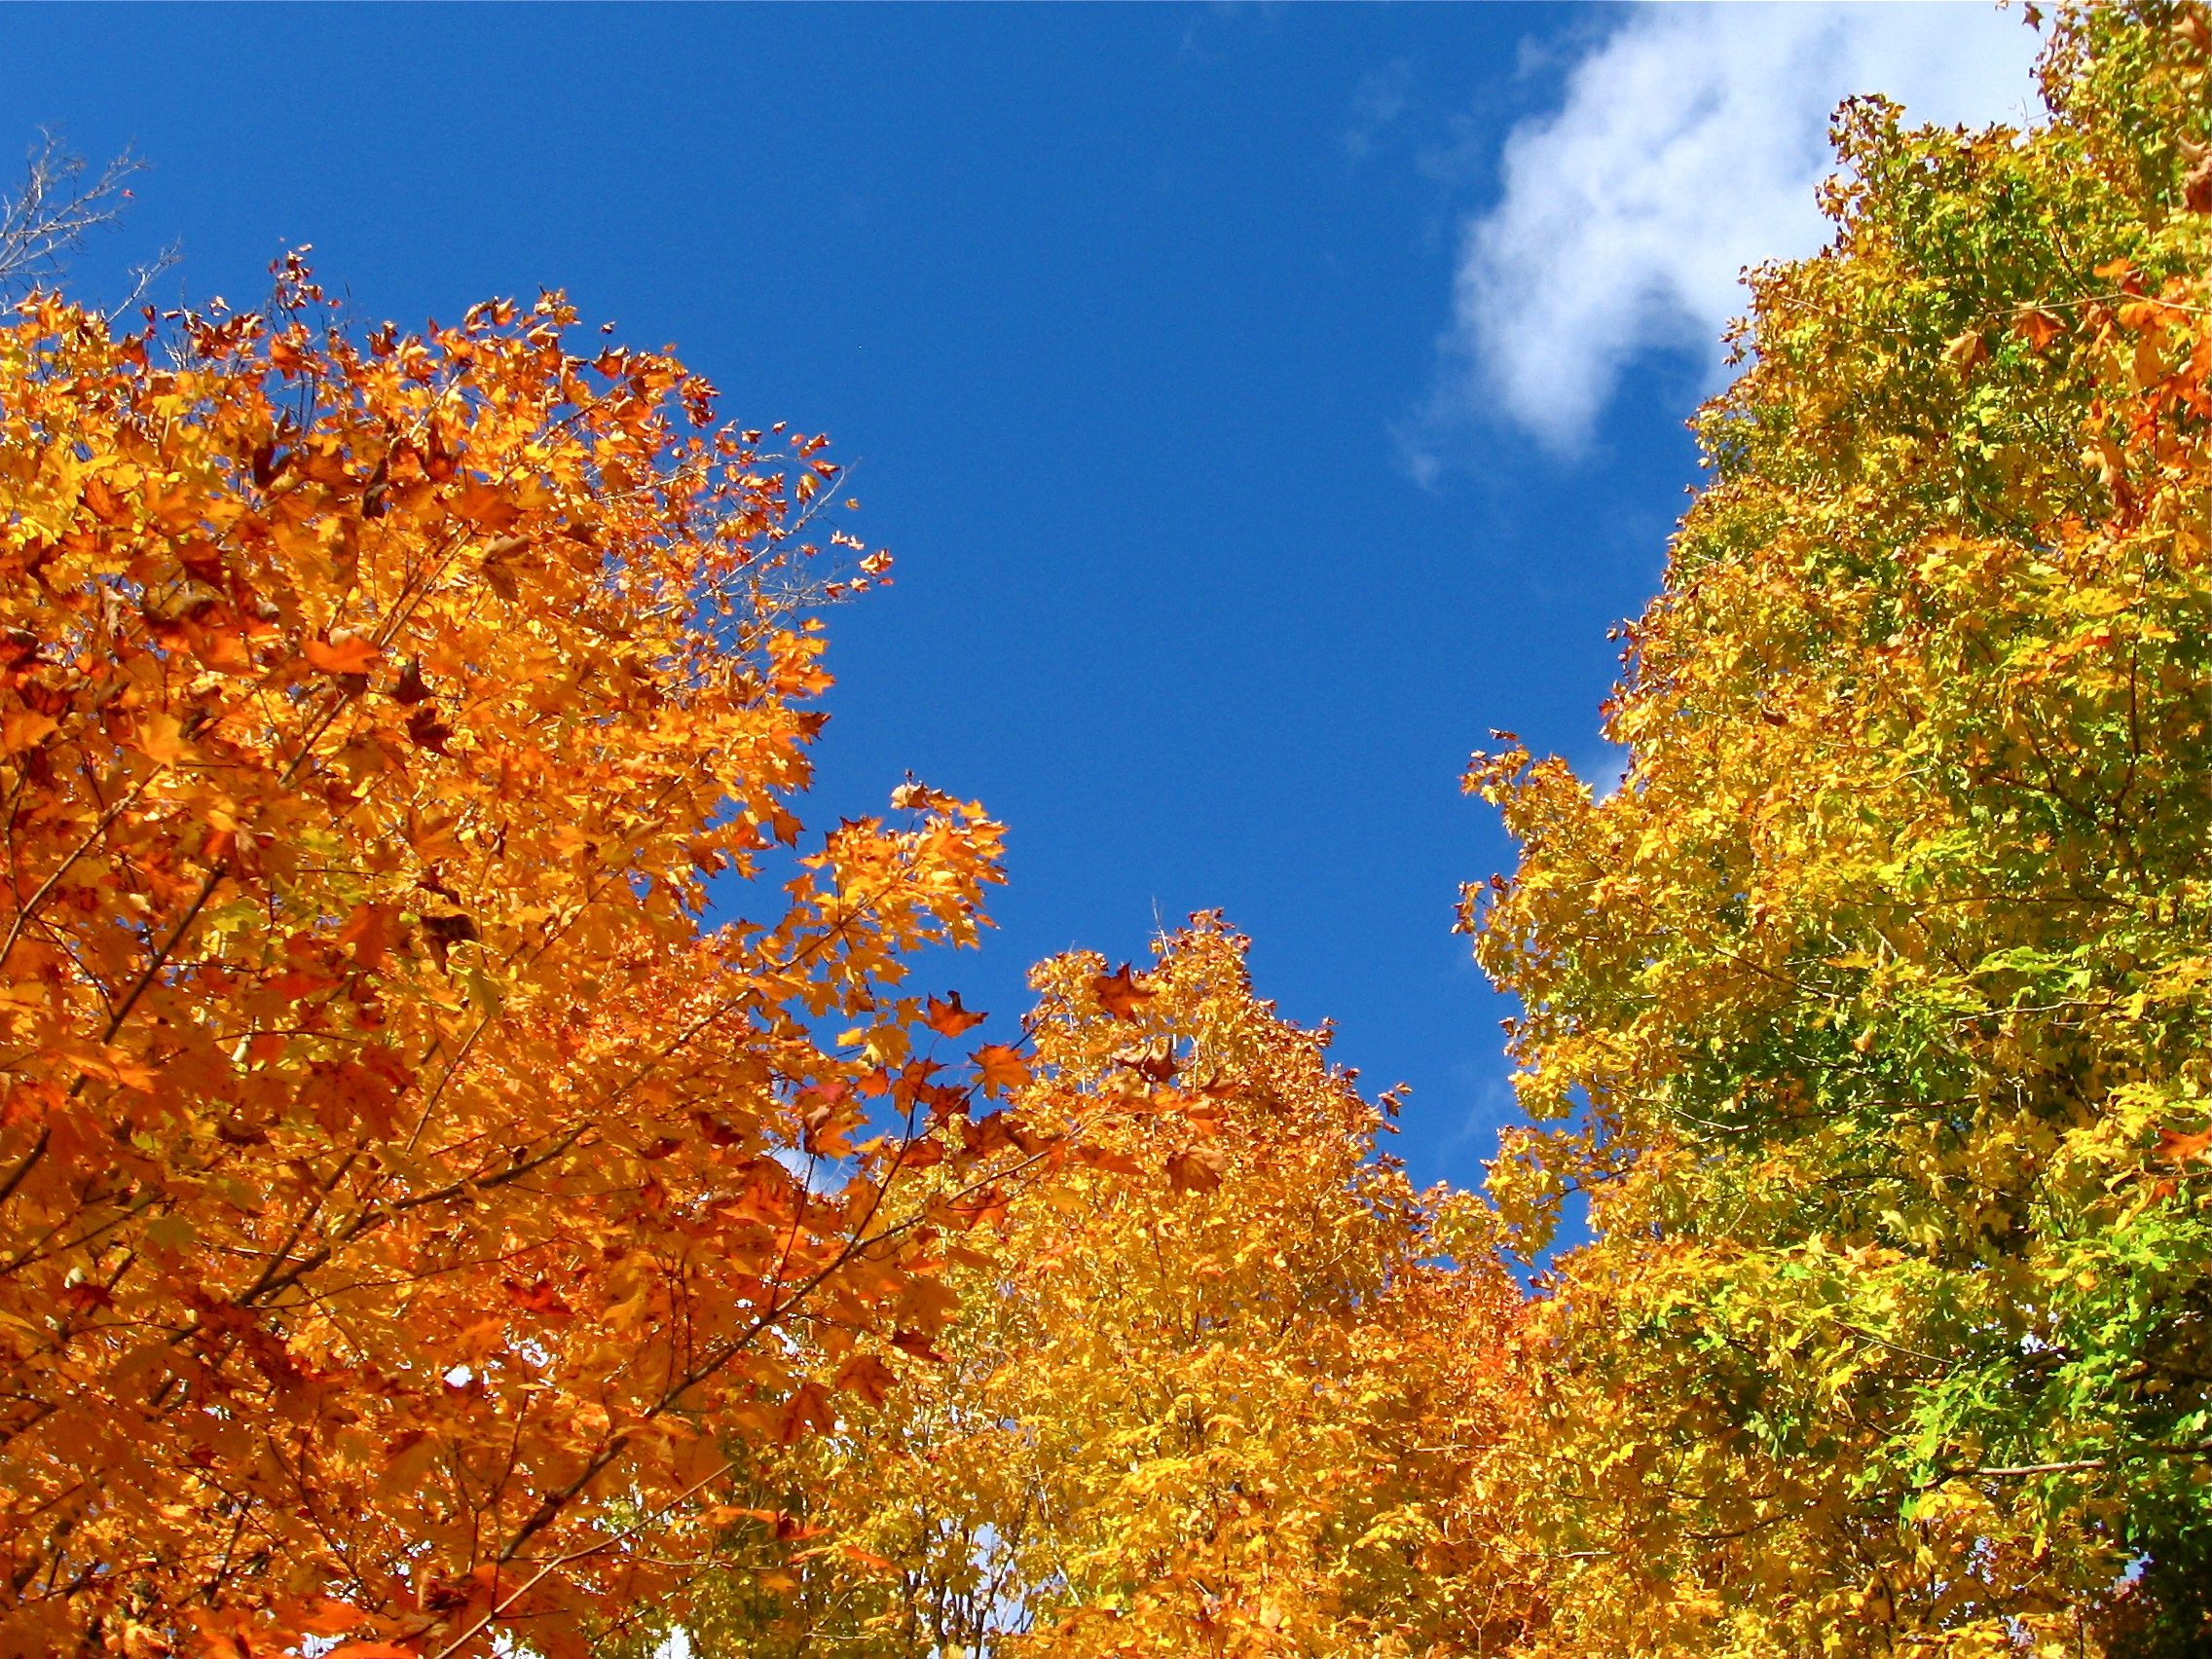 Autumn trees photo